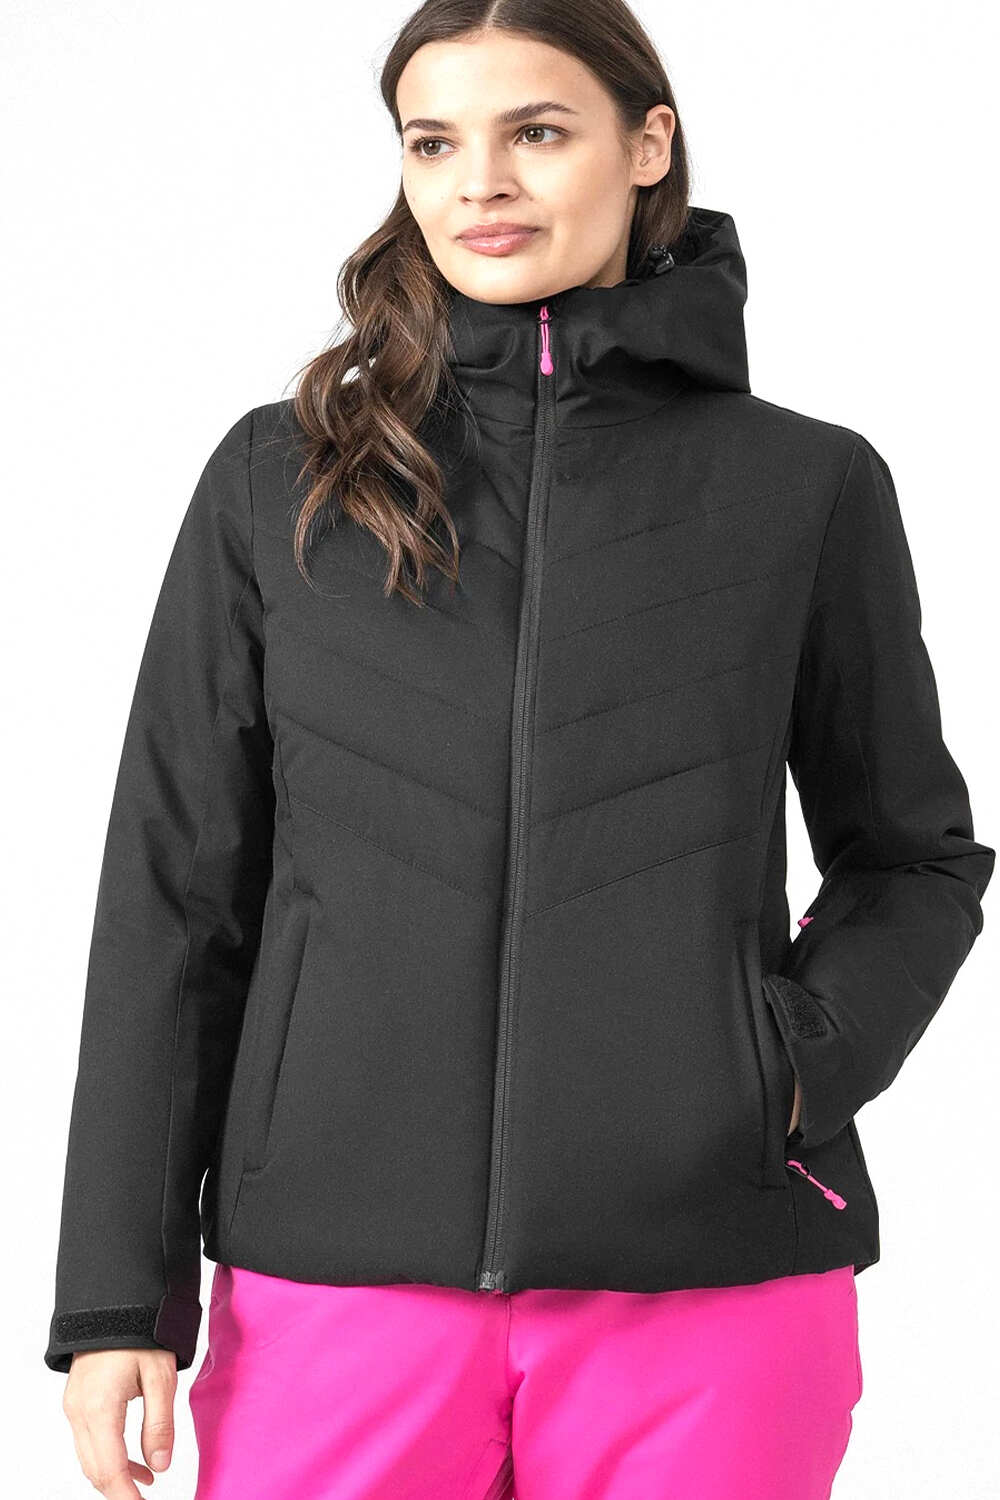 4f chaqueta esquí mujer WOMEN'S SKI JACKET KUDN003 vista frontal